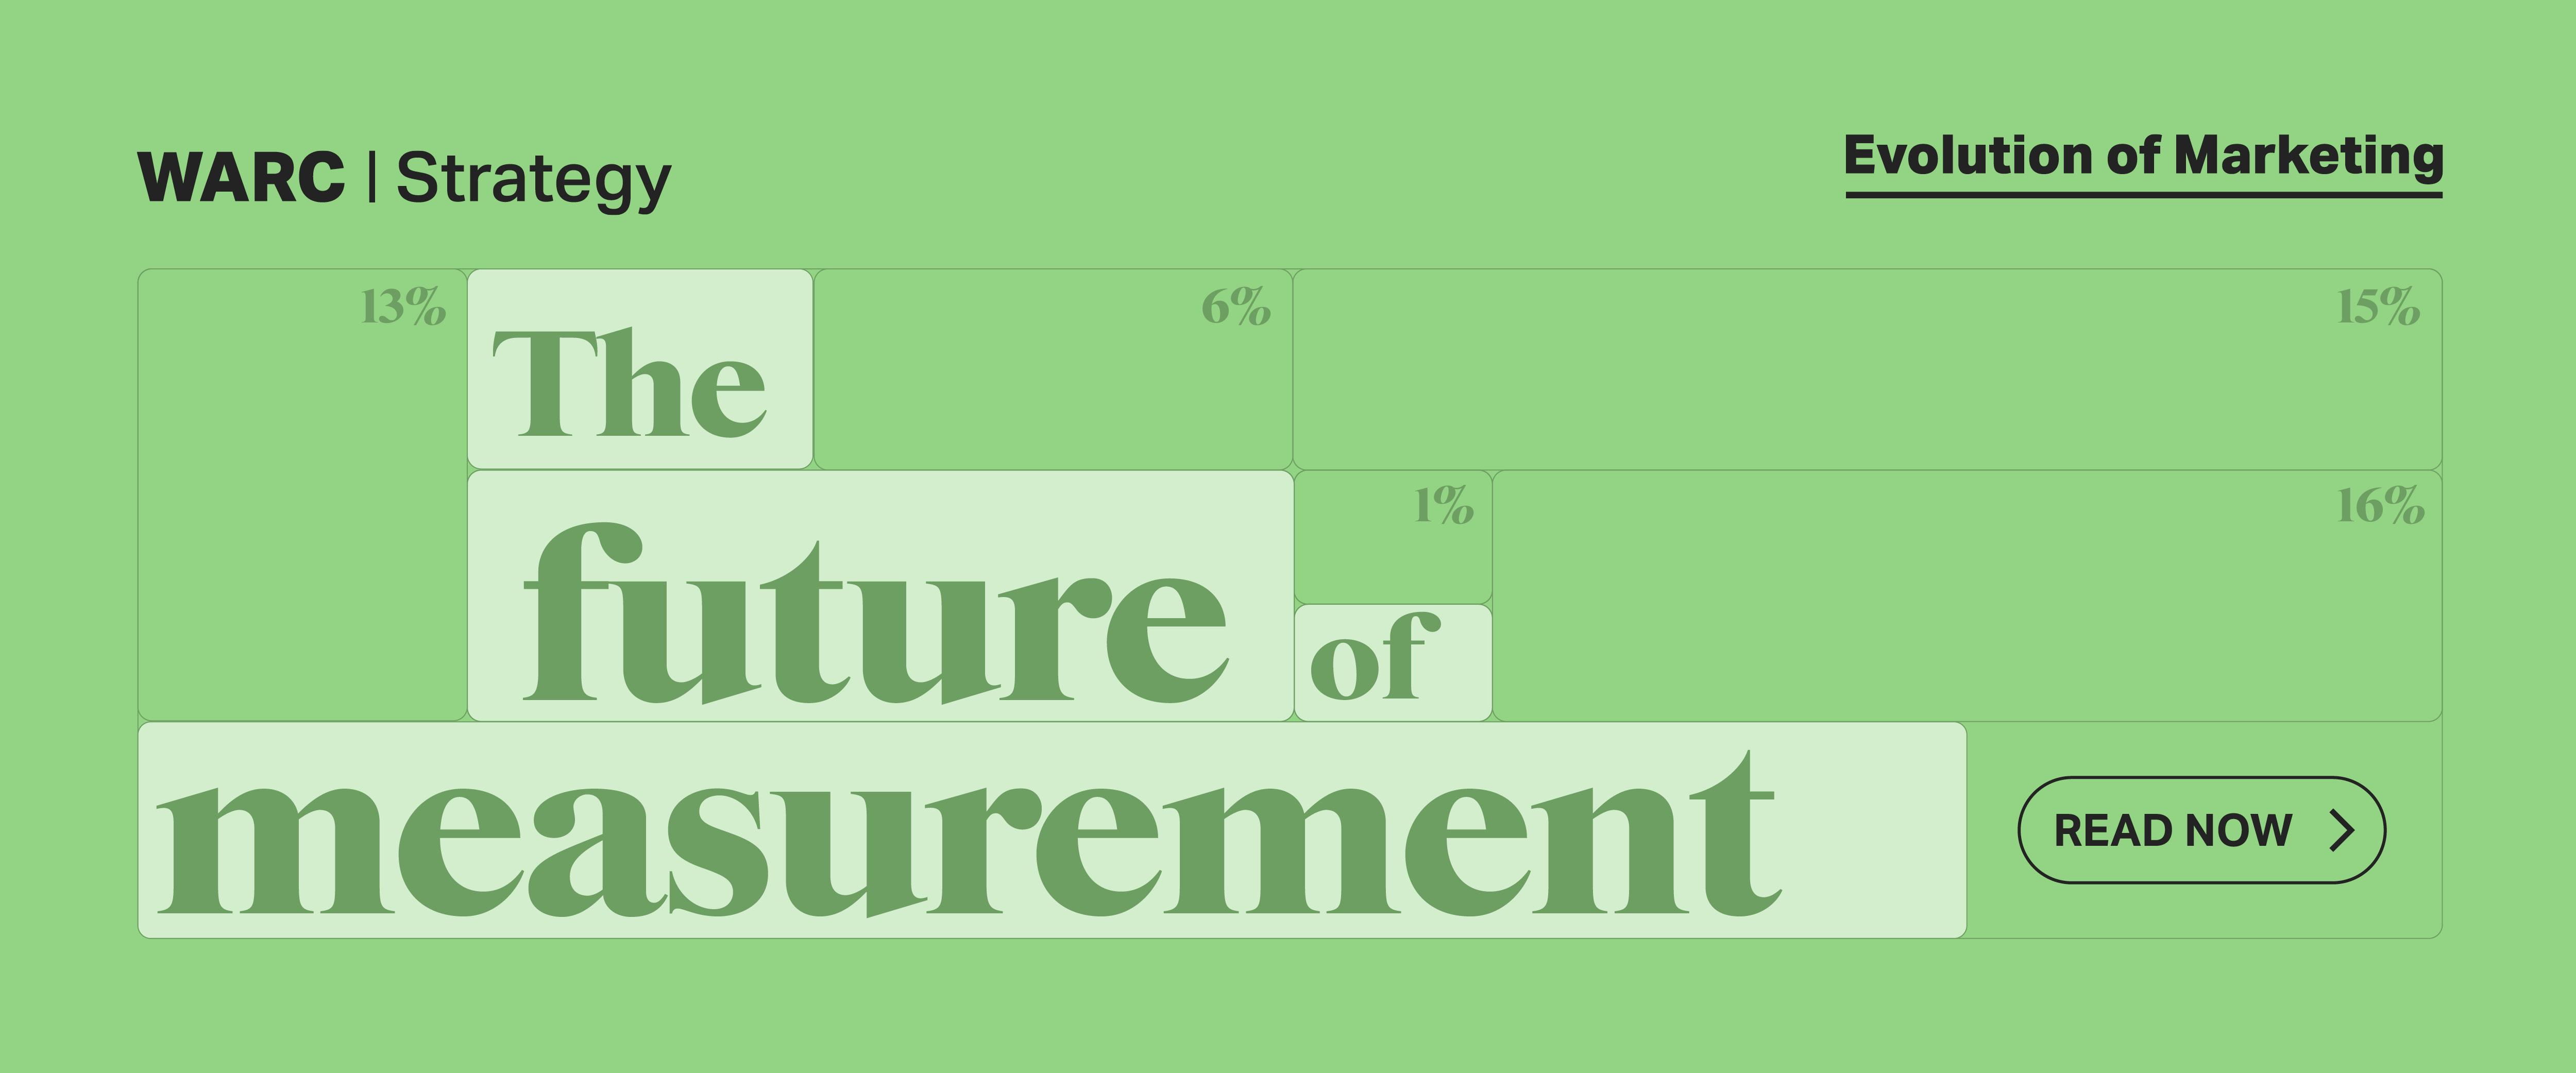 mmtmWARC_The future of measurement_v210.jpg